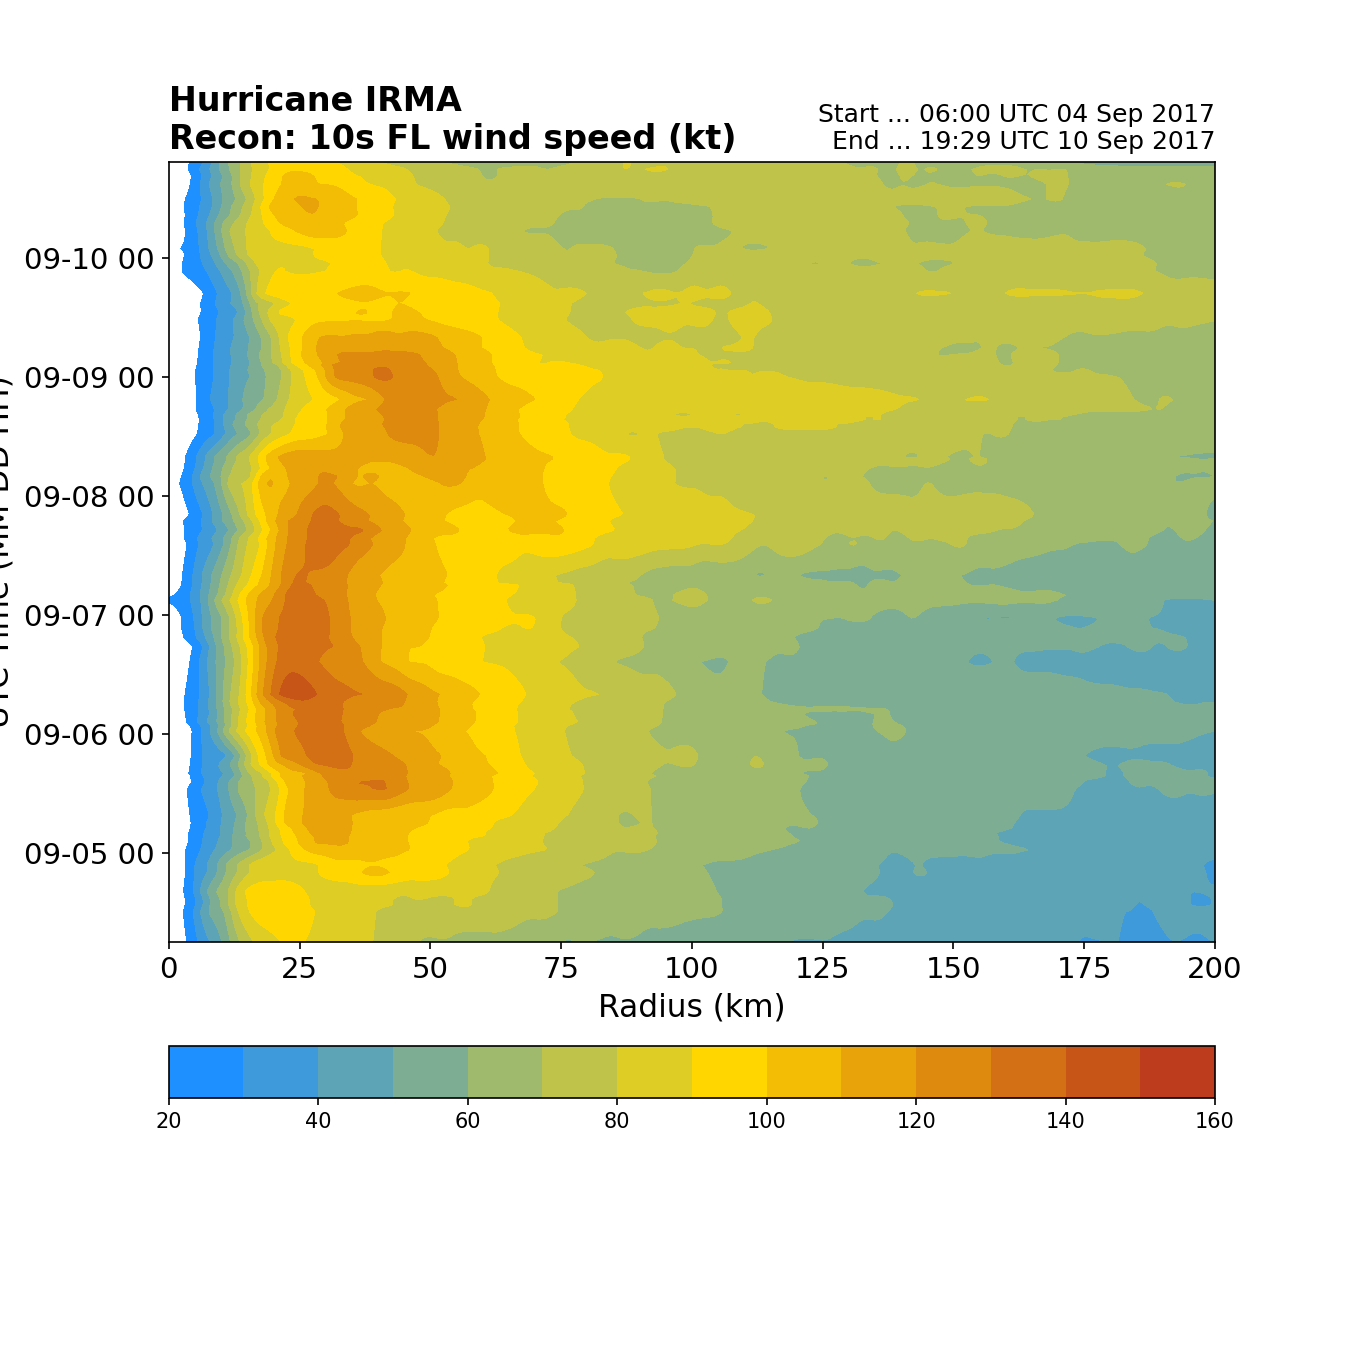 Hurricane IRMA Recon: 10s FL wind speed (kt), Start ... 06:00 UTC 04 Sep 2017 End ... 19:29 UTC 10 Sep 2017